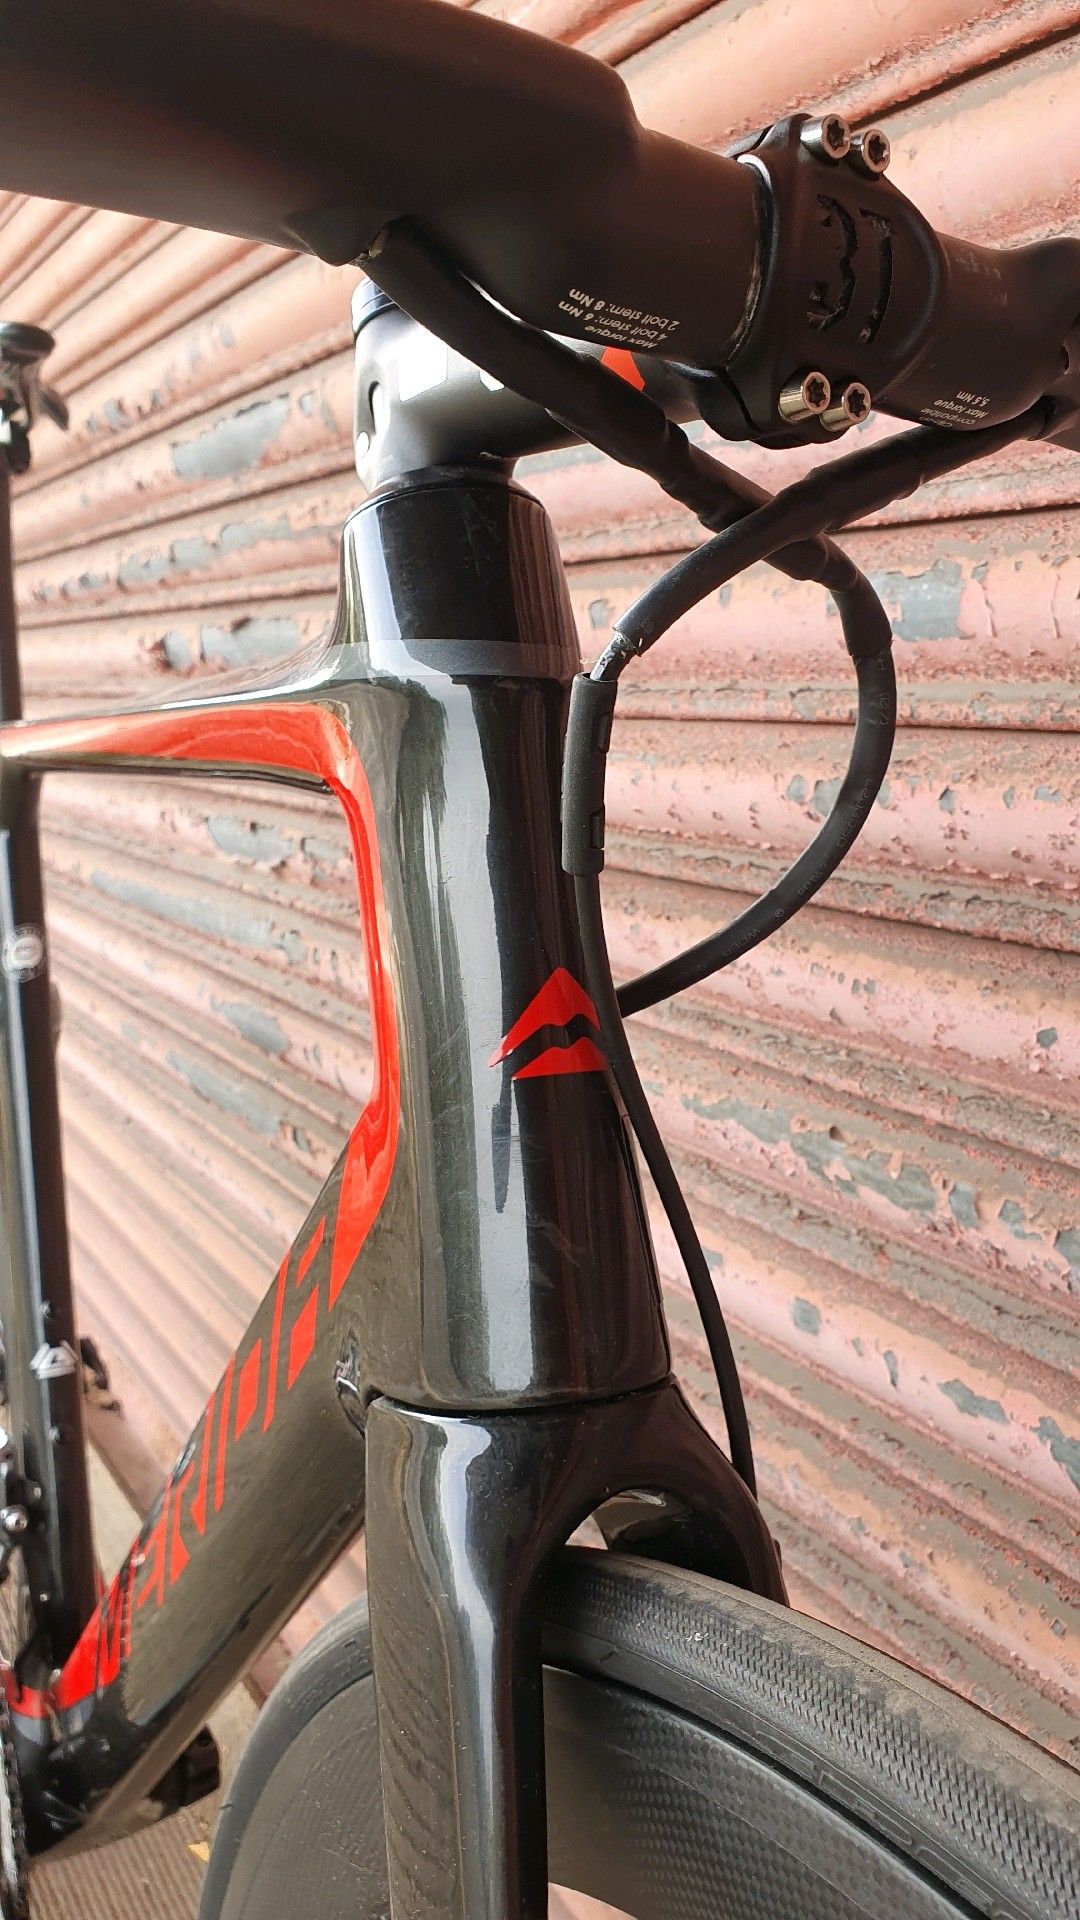 Merida Reacto 7000 E used in 58 cm | buycycle USA